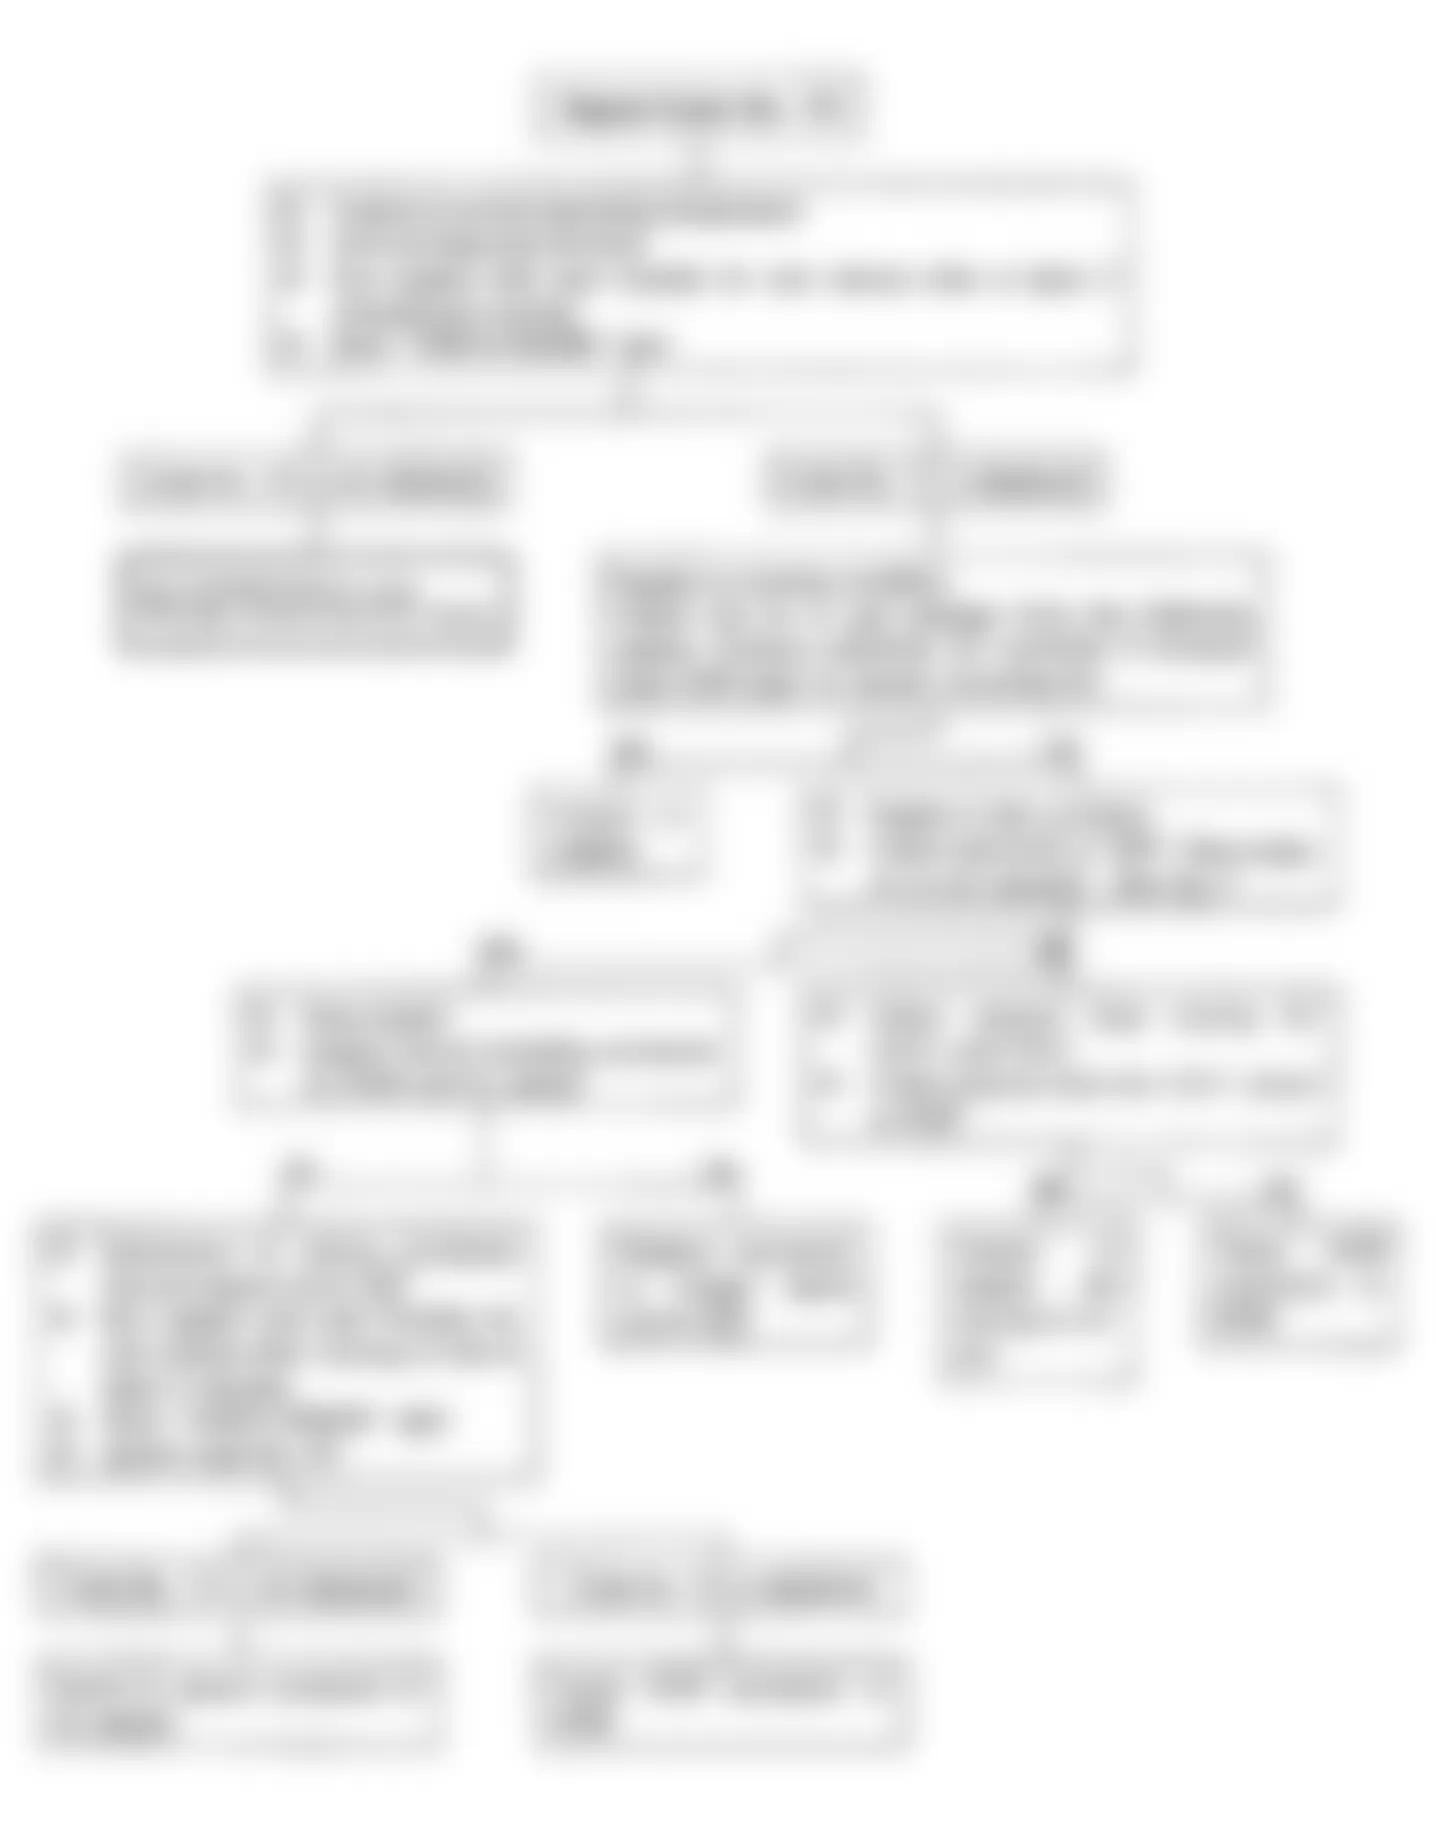 Isuzu Rodeo S 1992 - Component Locations -  Code No. 13 Flow Chart, Oxygen Sensor Circuit